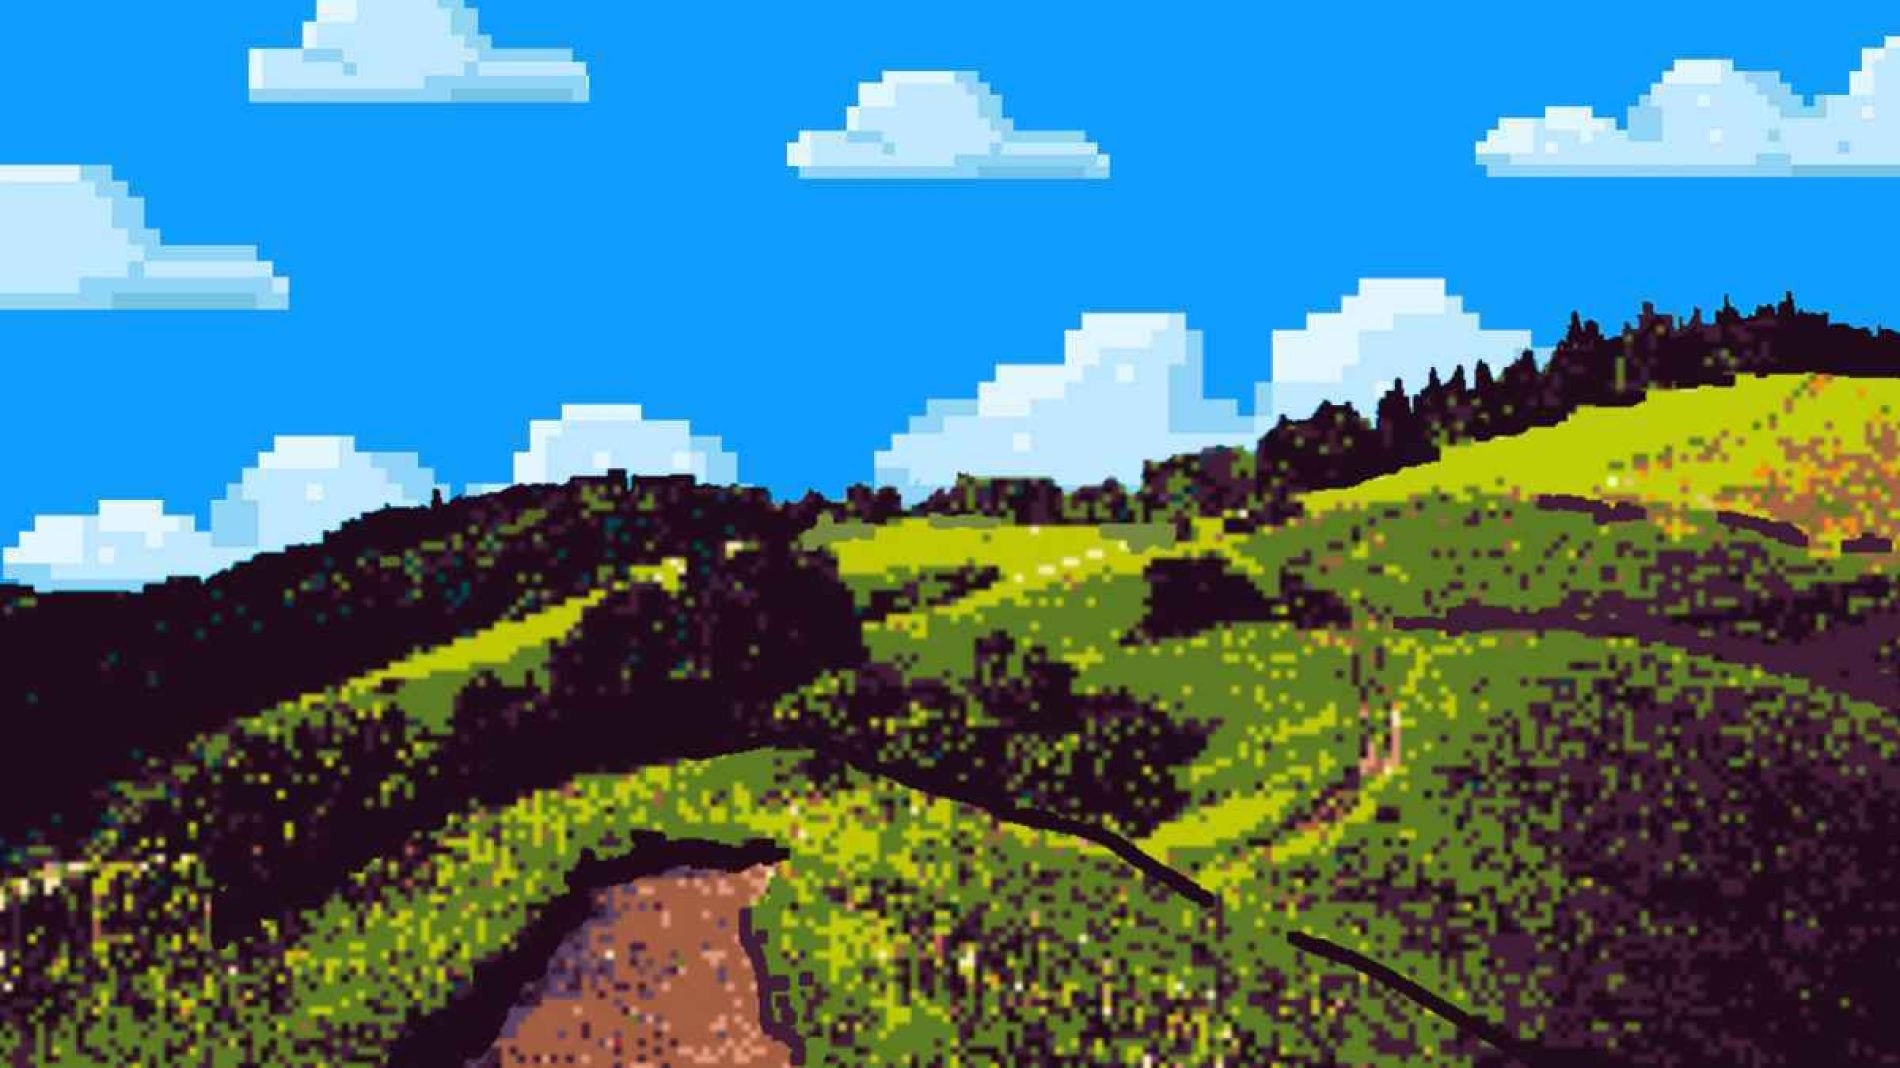 Pixel art illustration of hill